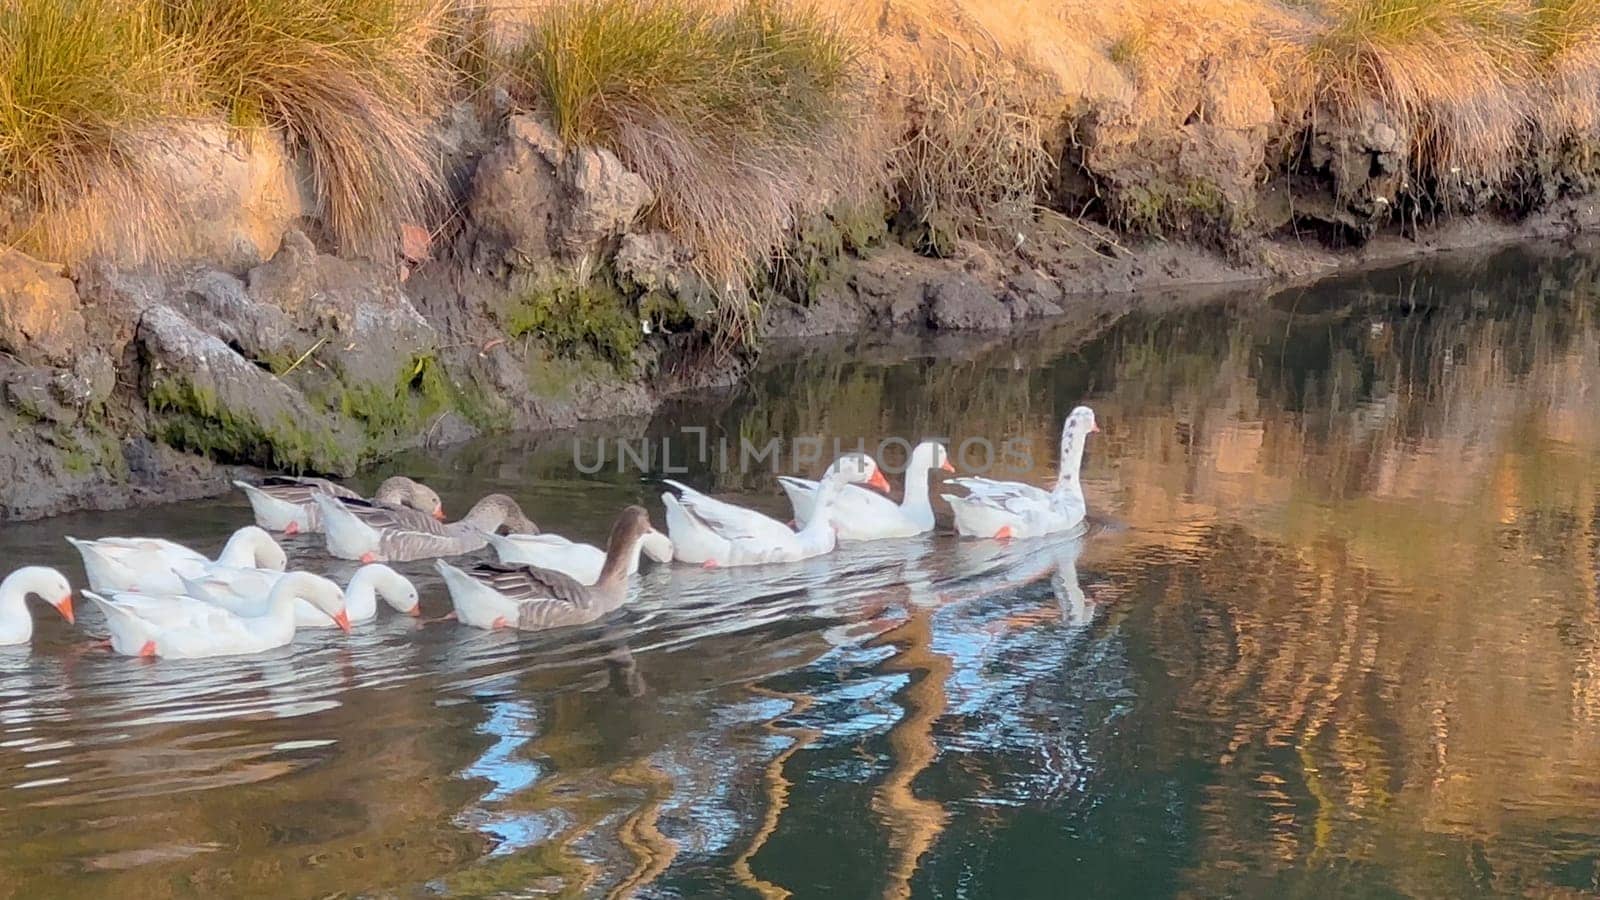 Ducklings in row waddle across rippling lake follow Mother Duck.